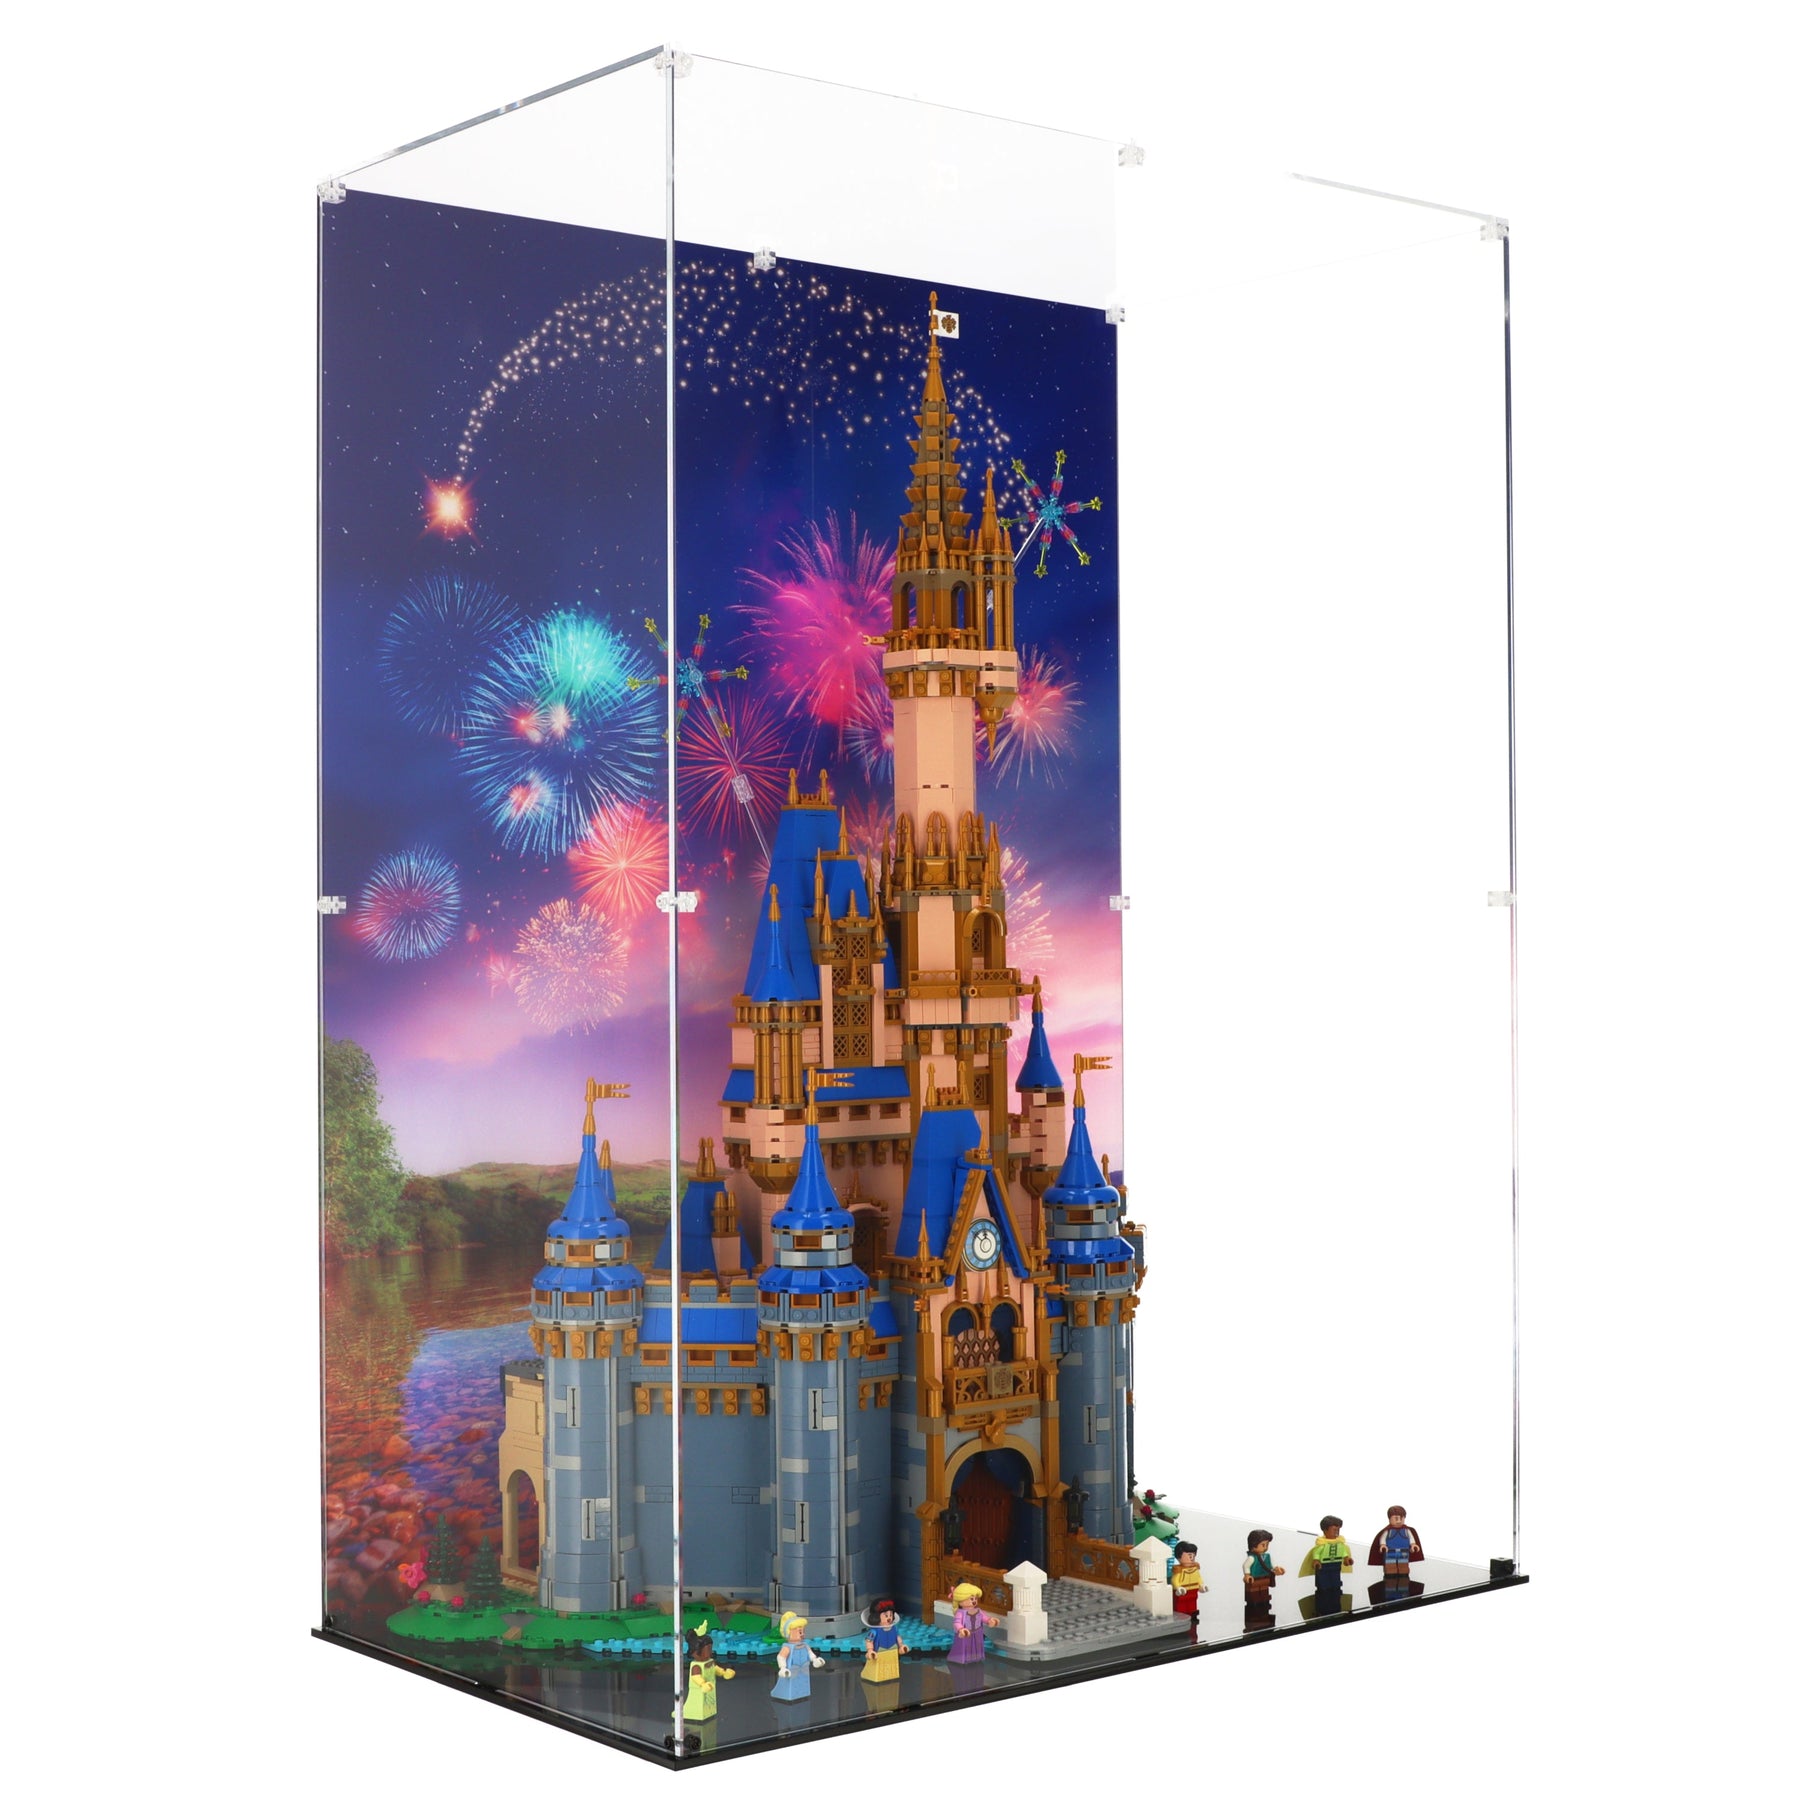 Lego 43222 Disney Castle - Display Case